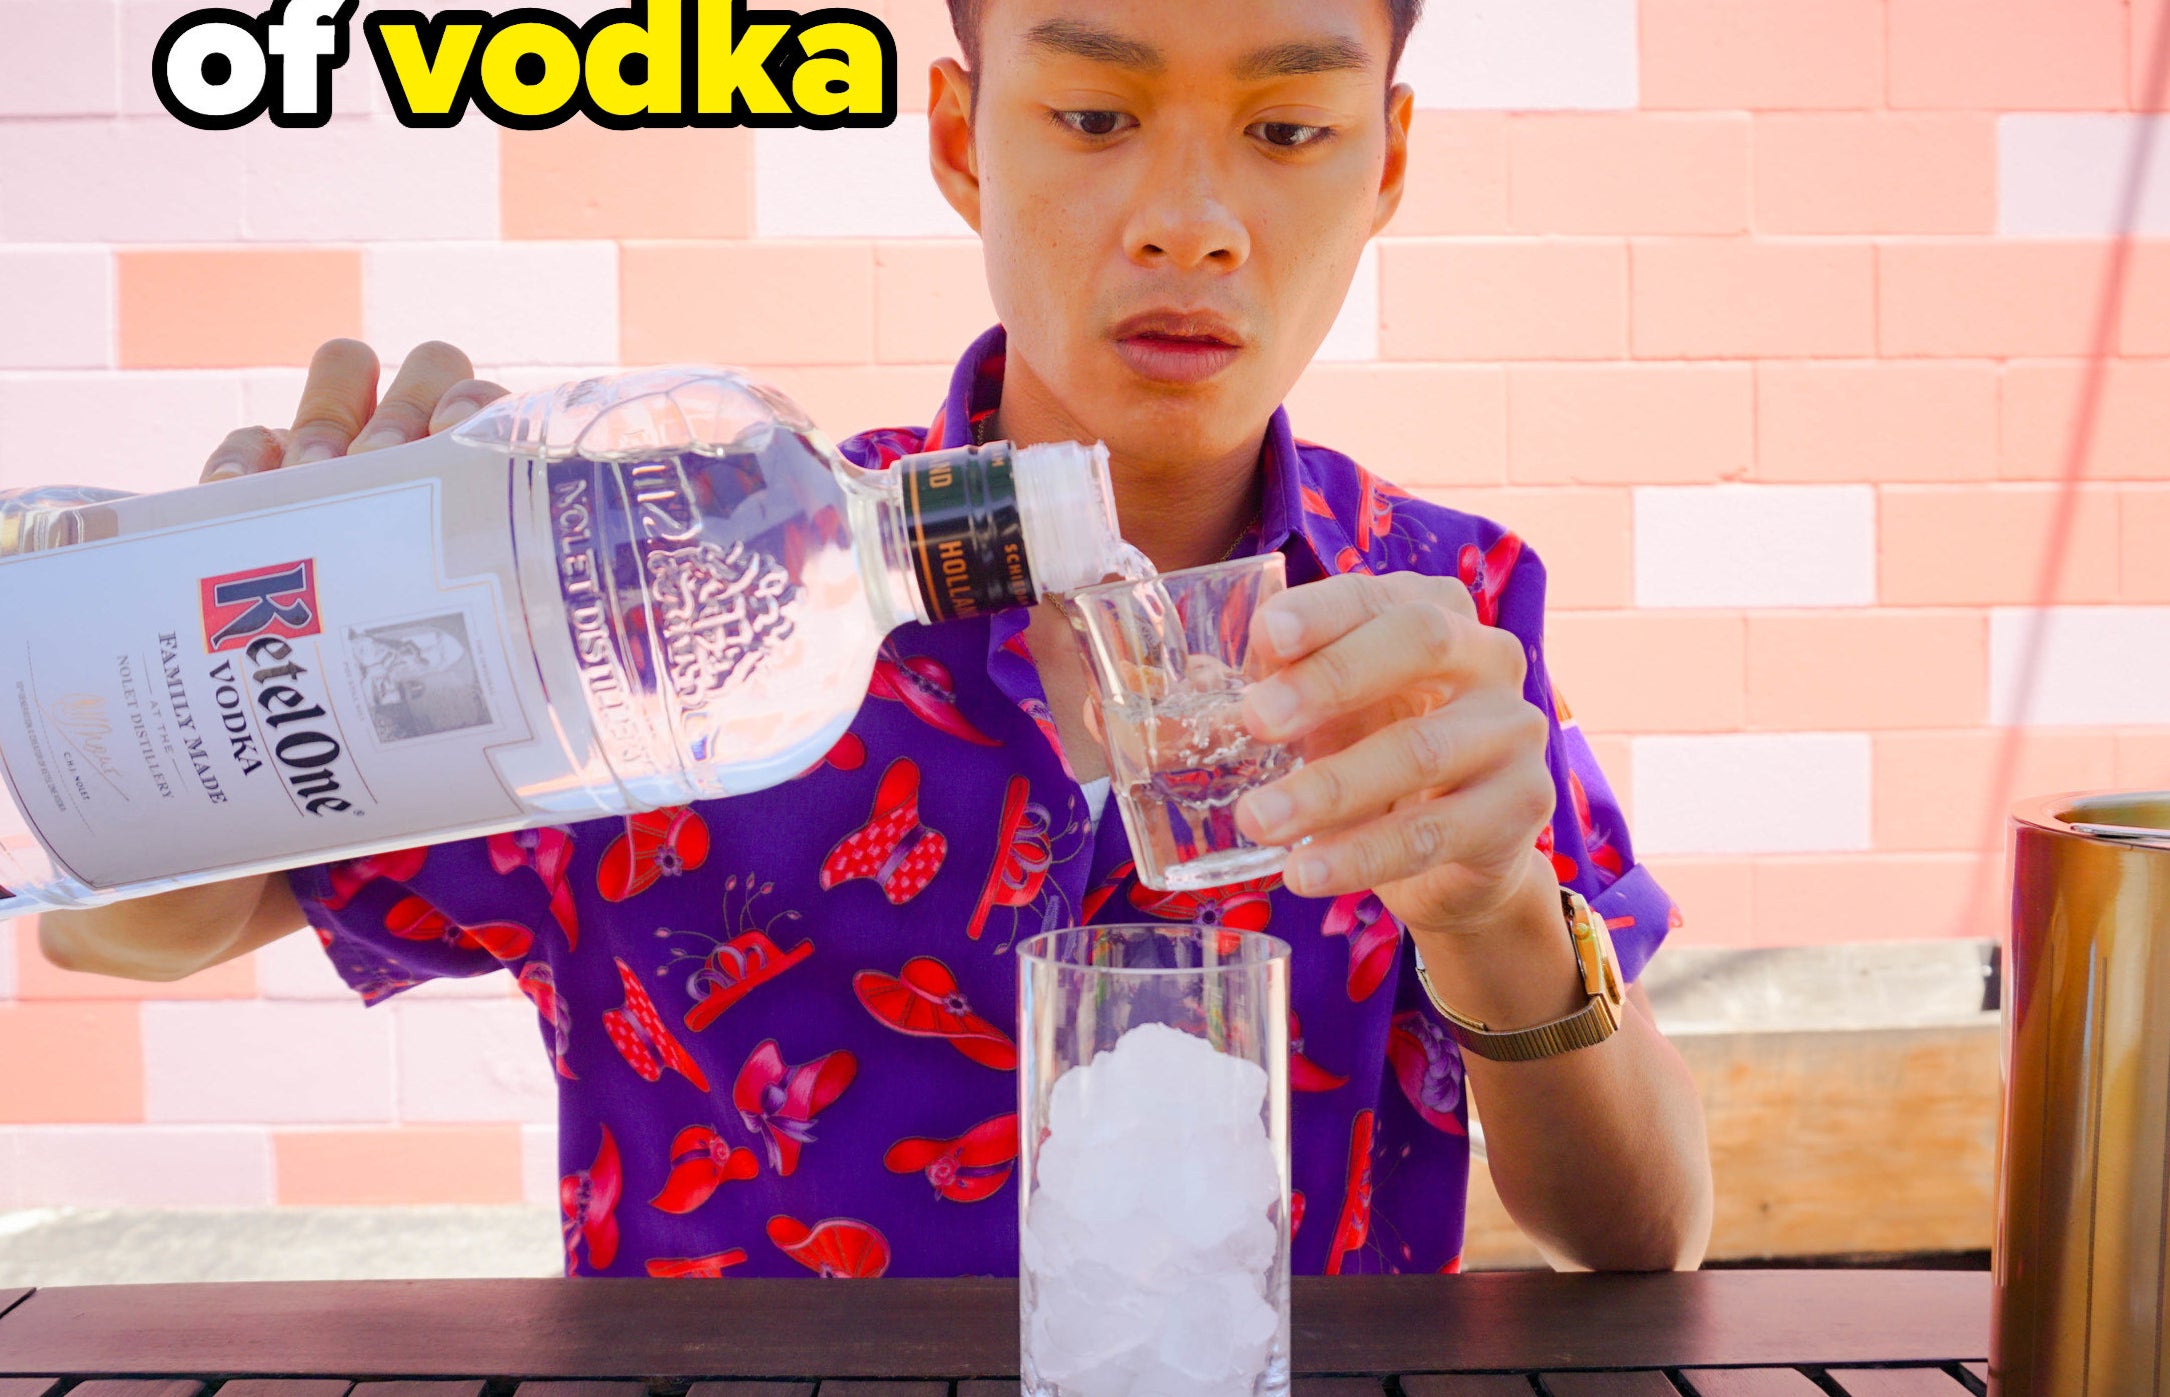 author pouring vodka into a shot glass